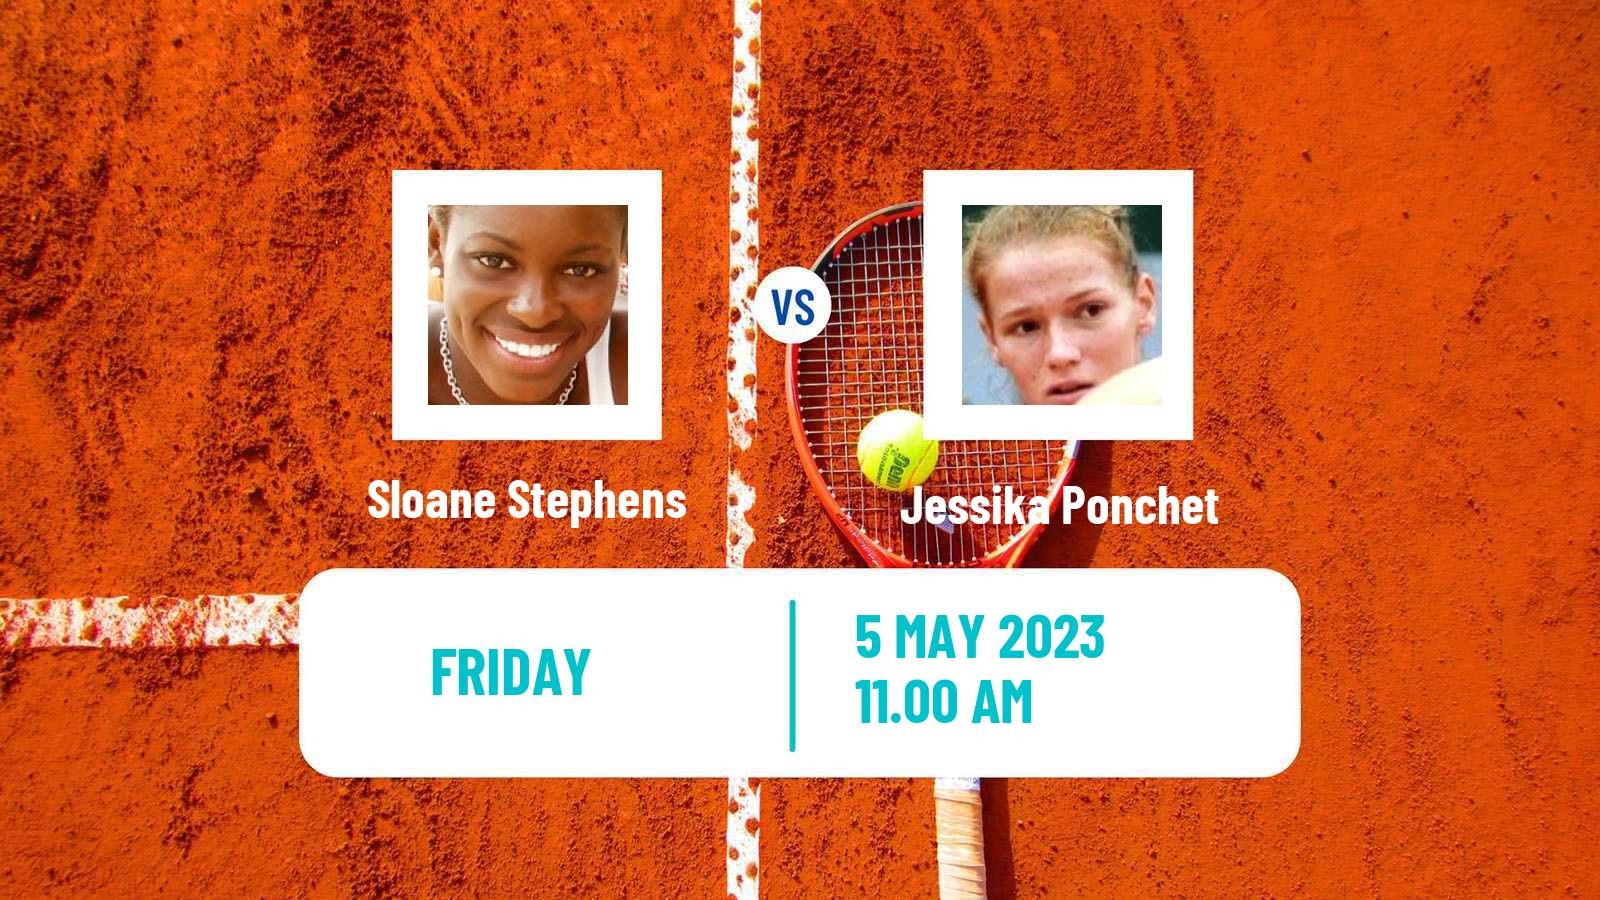 Tennis ATP Challenger Sloane Stephens - Jessika Ponchet